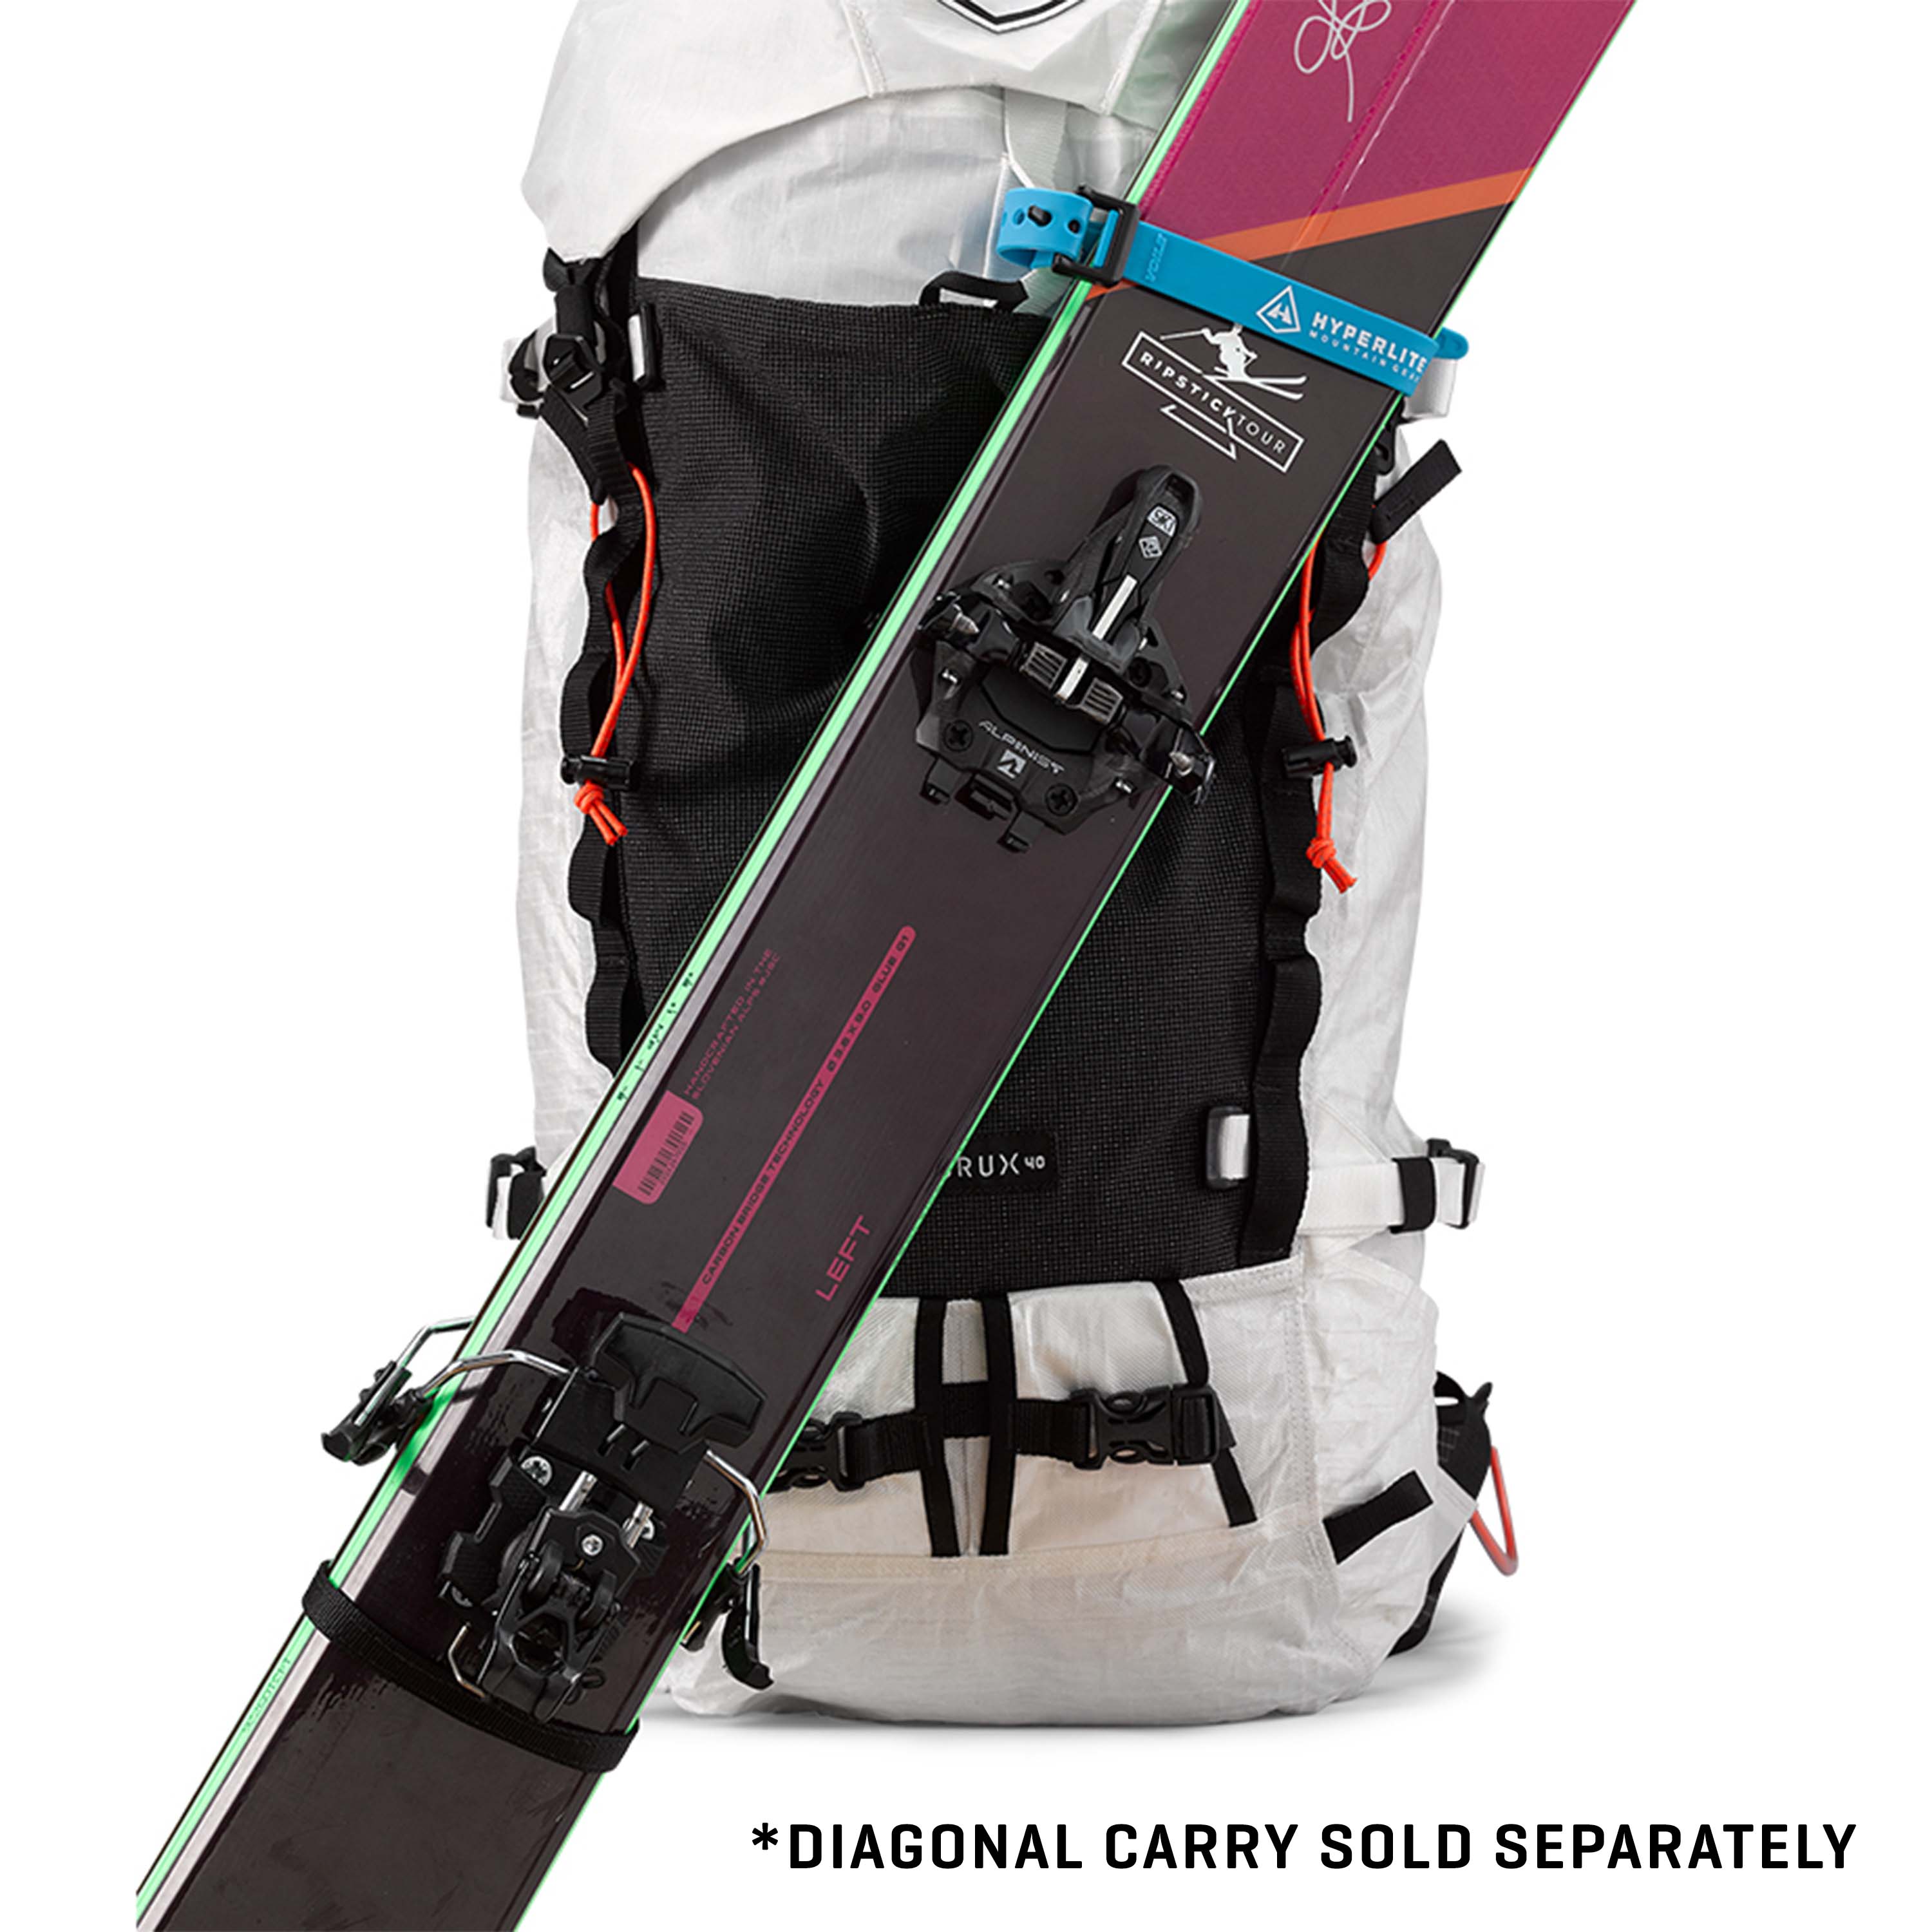 Crux 40 Ultralight Technical Ski Mountaineering Backpack 40 Liter DCF Dyneema, Medium, Hyperlite Mountain Gear